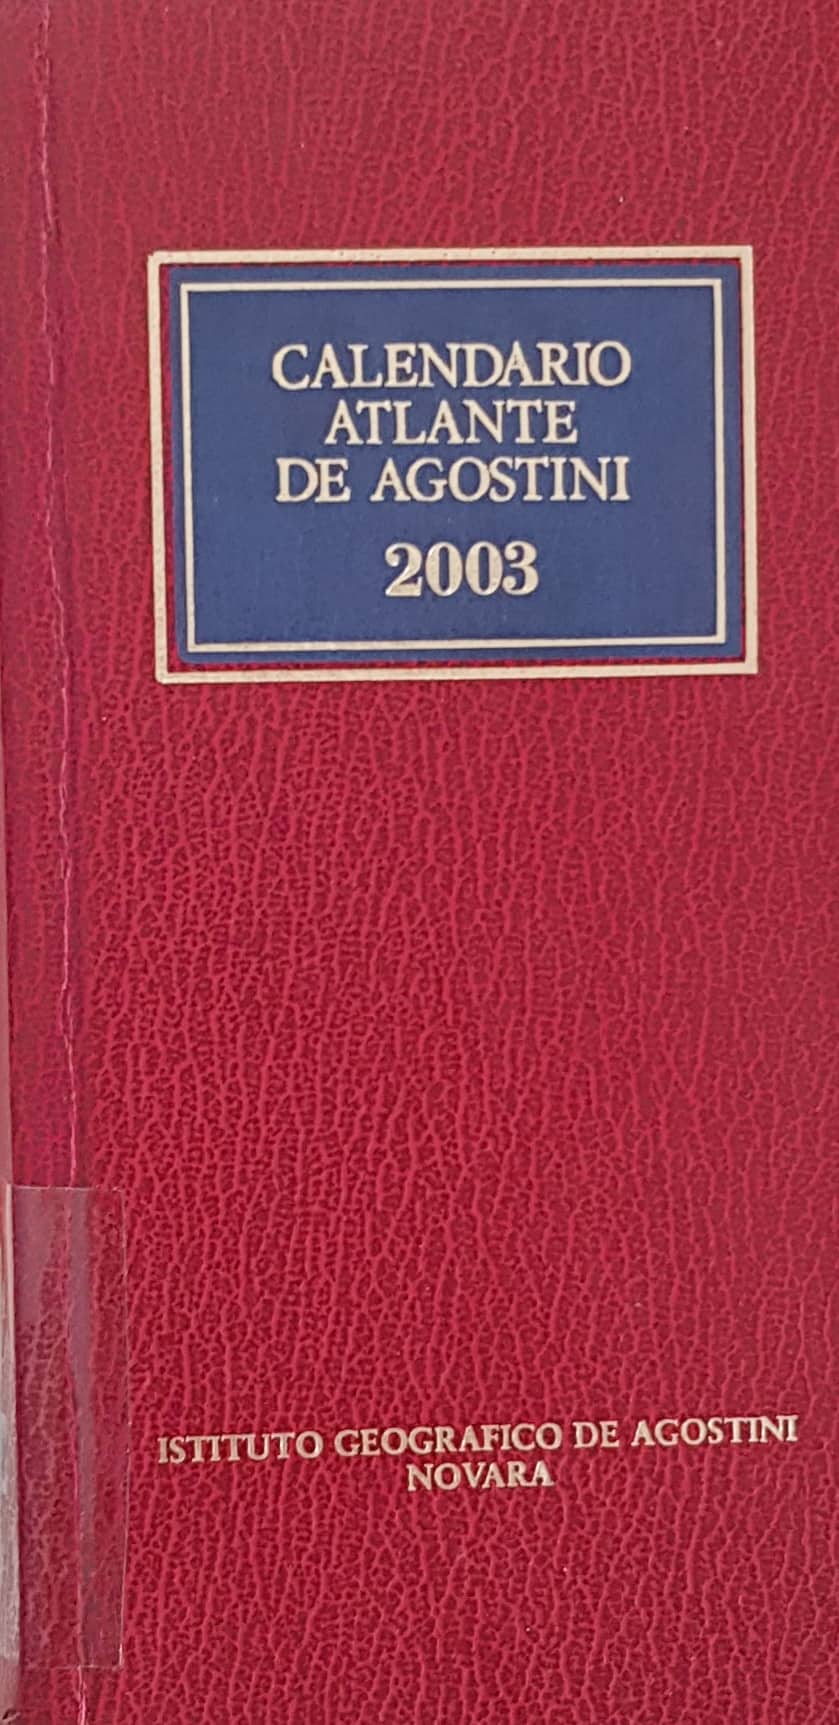 Copertina di Calendario Atlante de Agostini